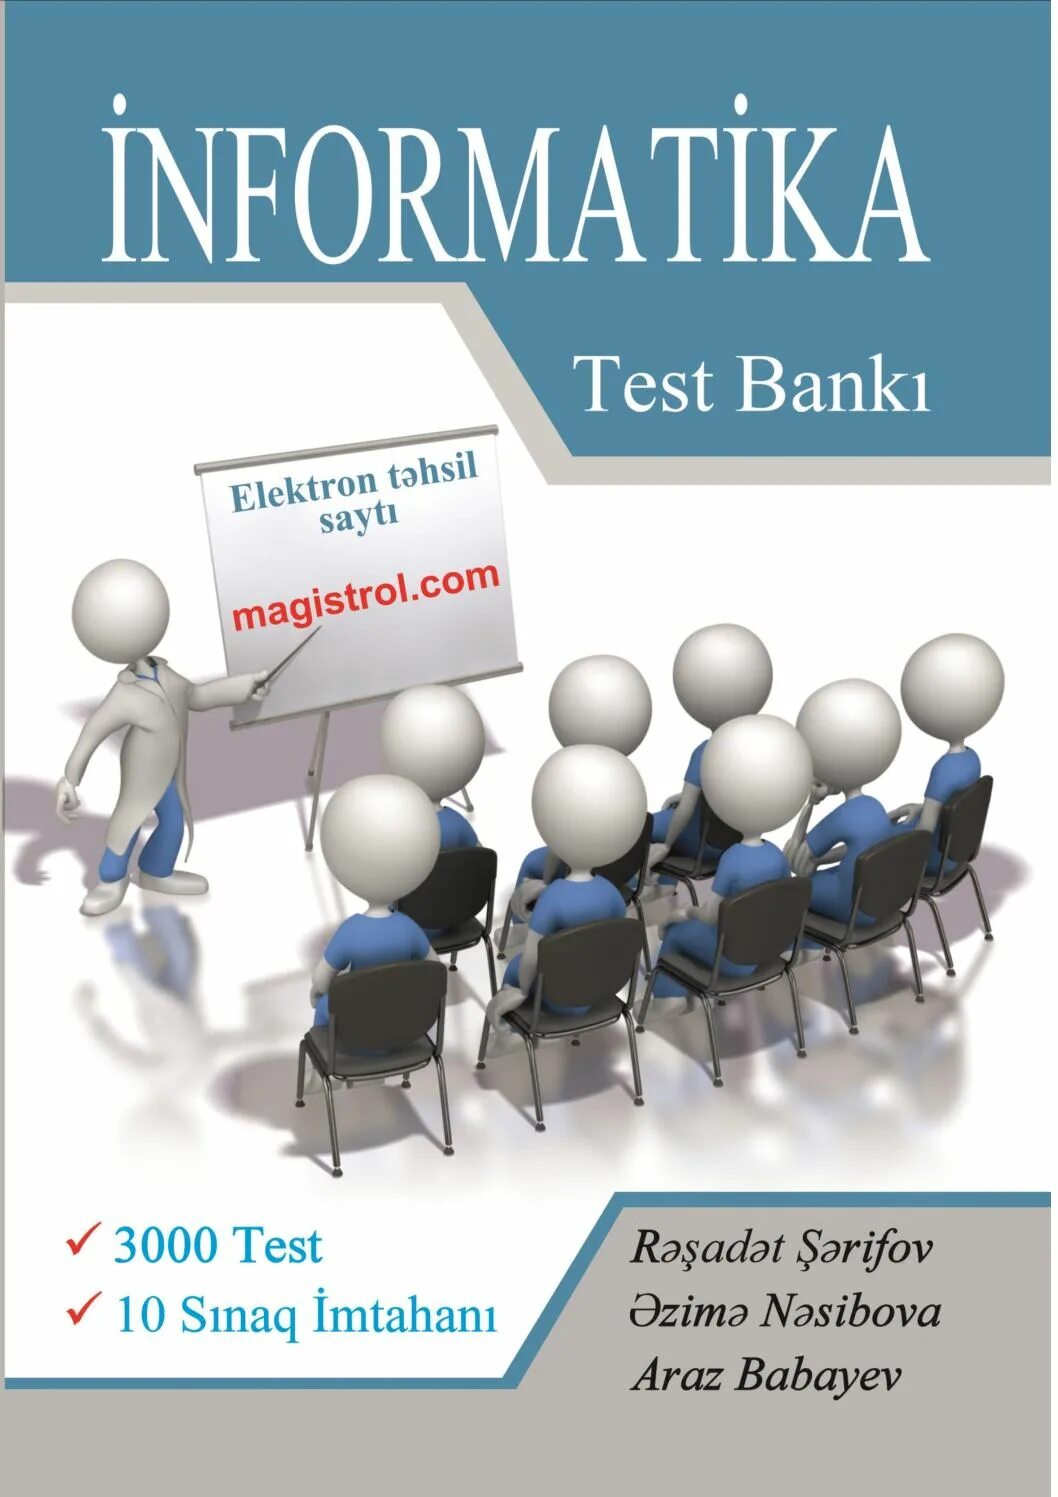 11 informatika pdf. Информатика фанидан тест. -Sinf Informatika. My Test Информатика фанидан. Informatika Test javoblari.